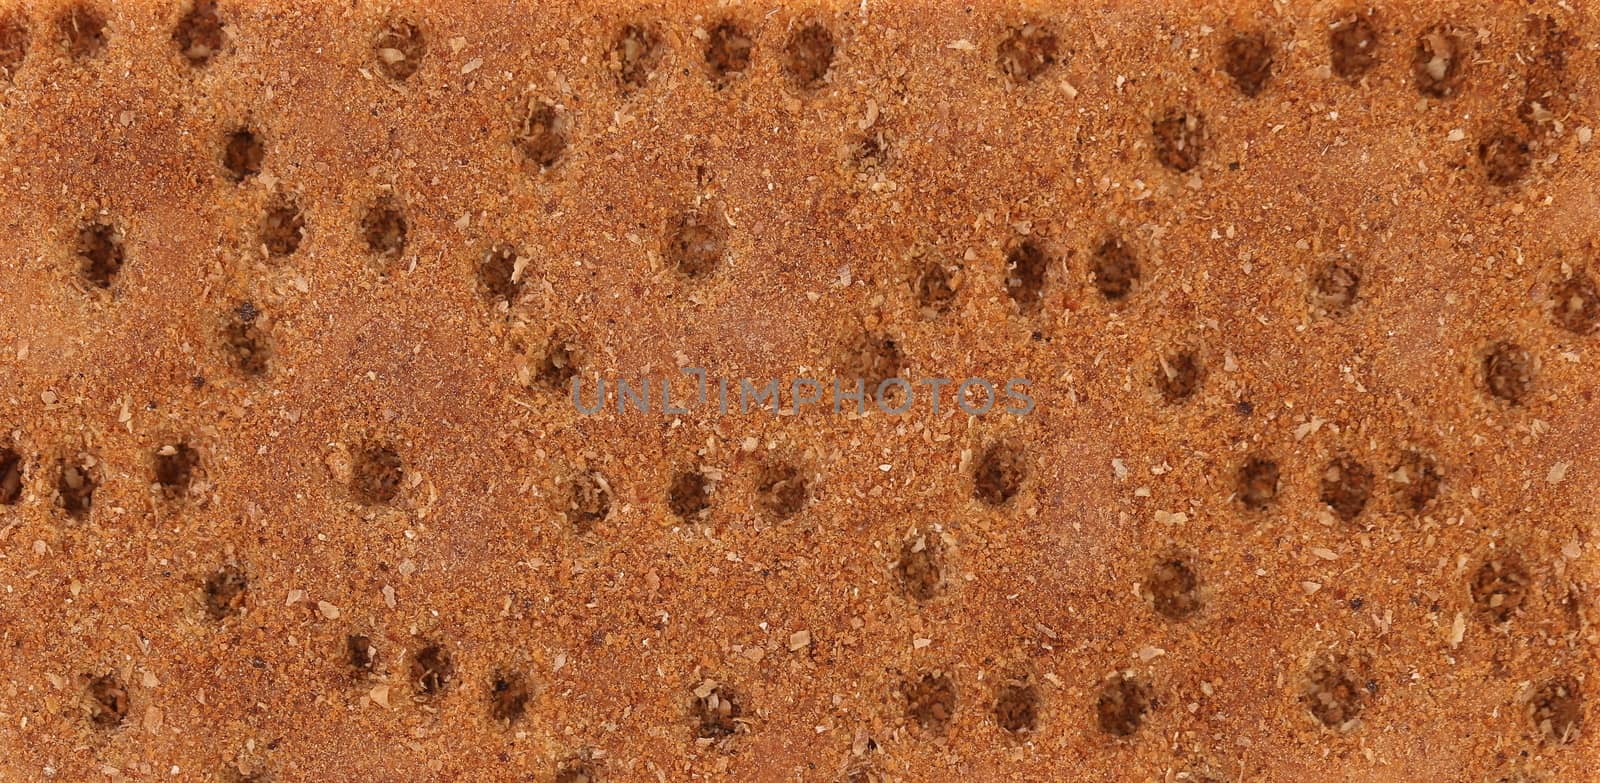 Background of whole grain crisp bread. by indigolotos